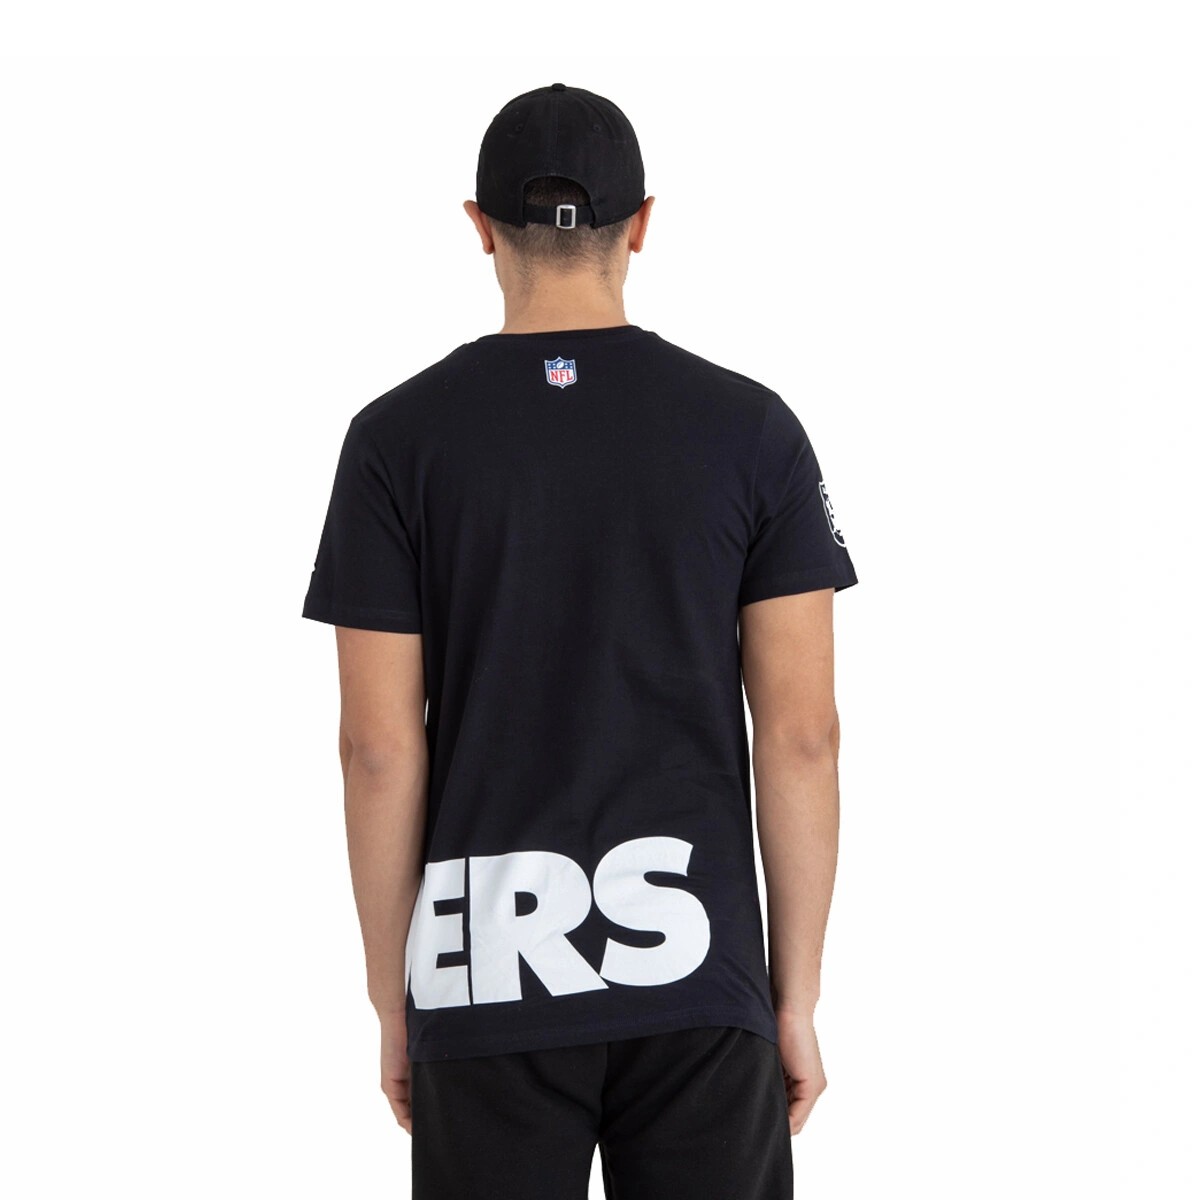 New Era Las Vegas Raiders Wrap Around Black T-Shirt 11859961